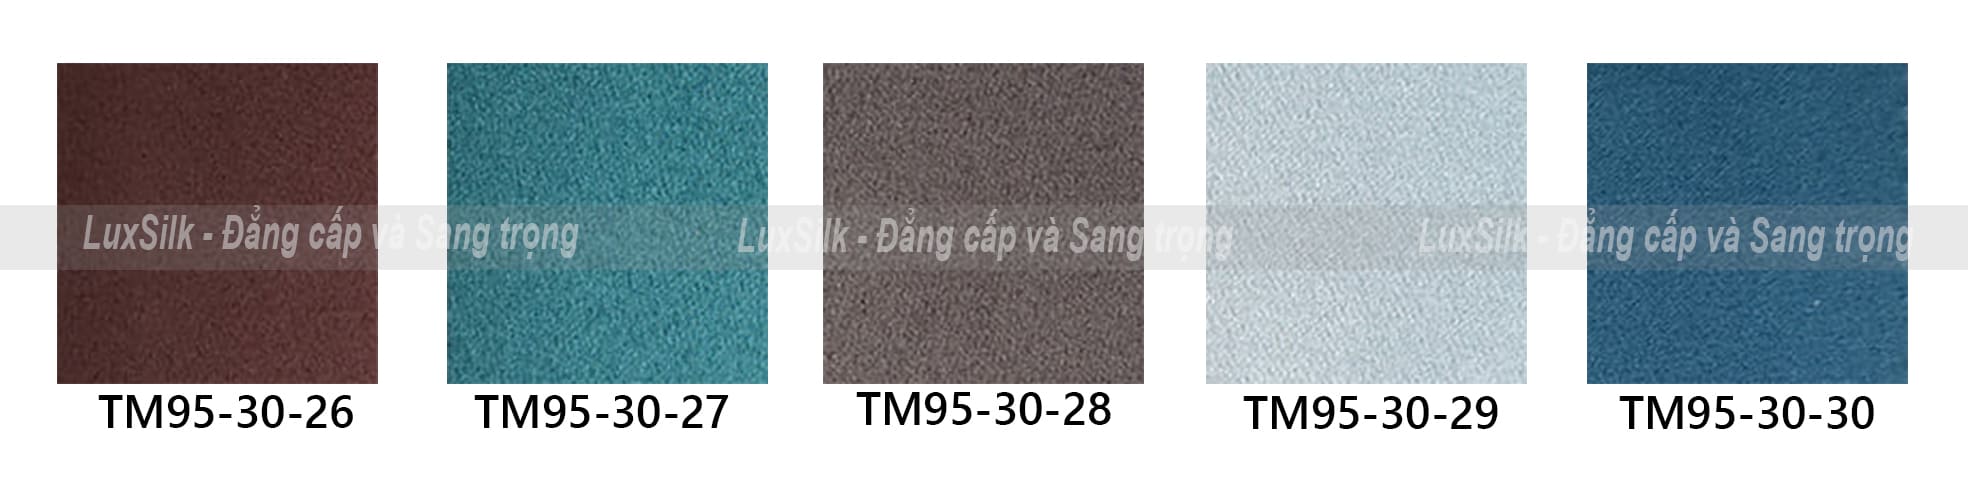 Rèm vải TM95-30